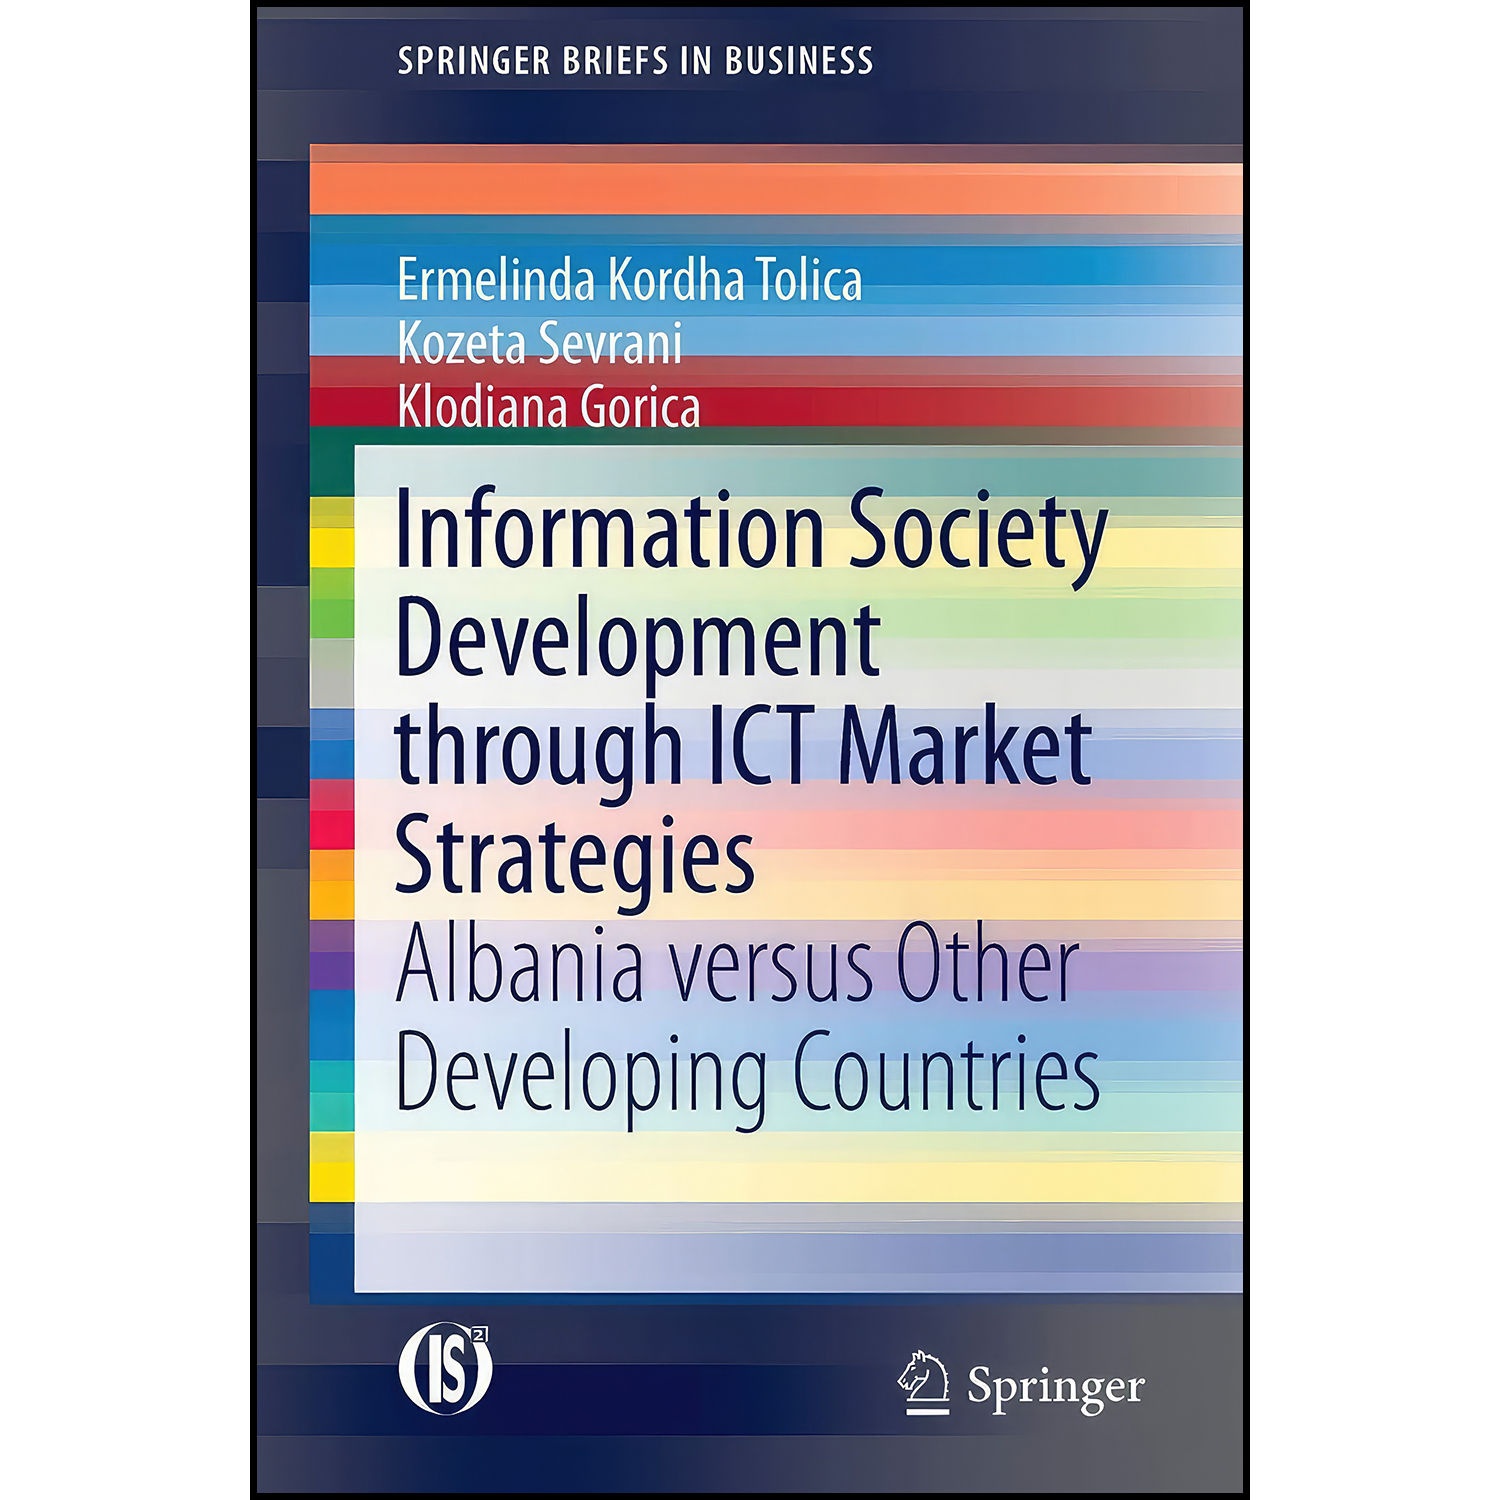 کتاب Information Society Development through ICT Market Strategies اثر جمعي از نويسندگان انتشارات Springer